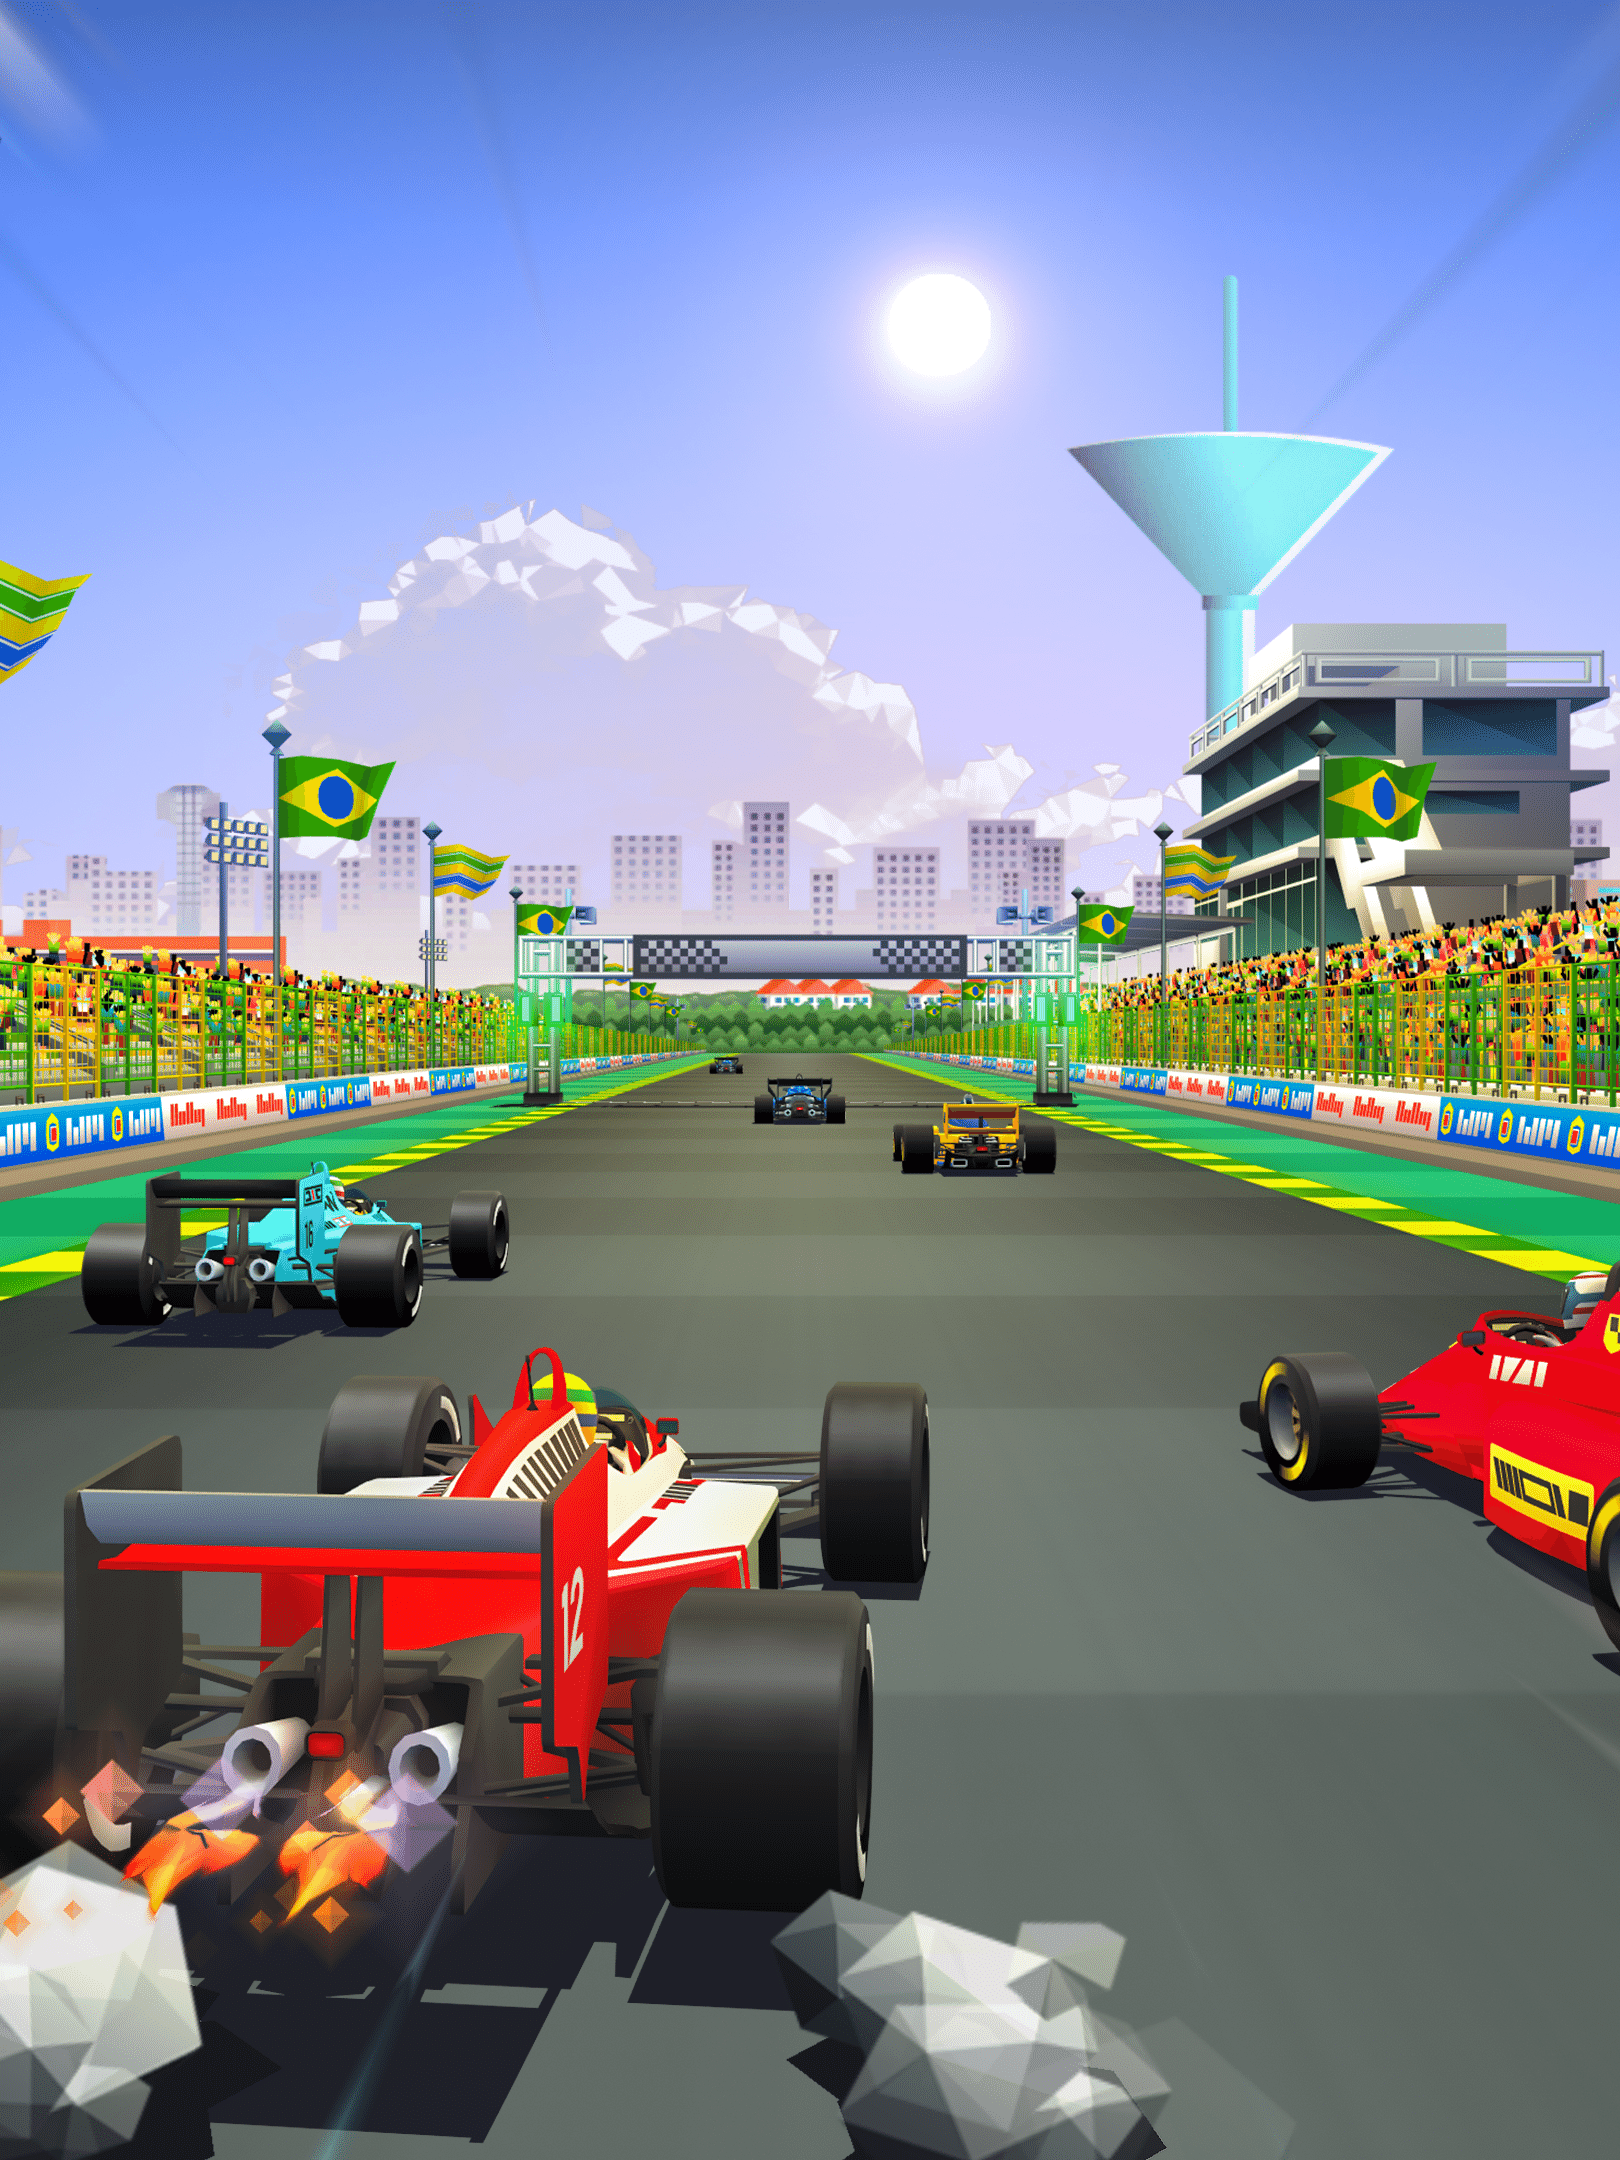 Jogo Horizon Chase Turbo Senna Sempre PS4